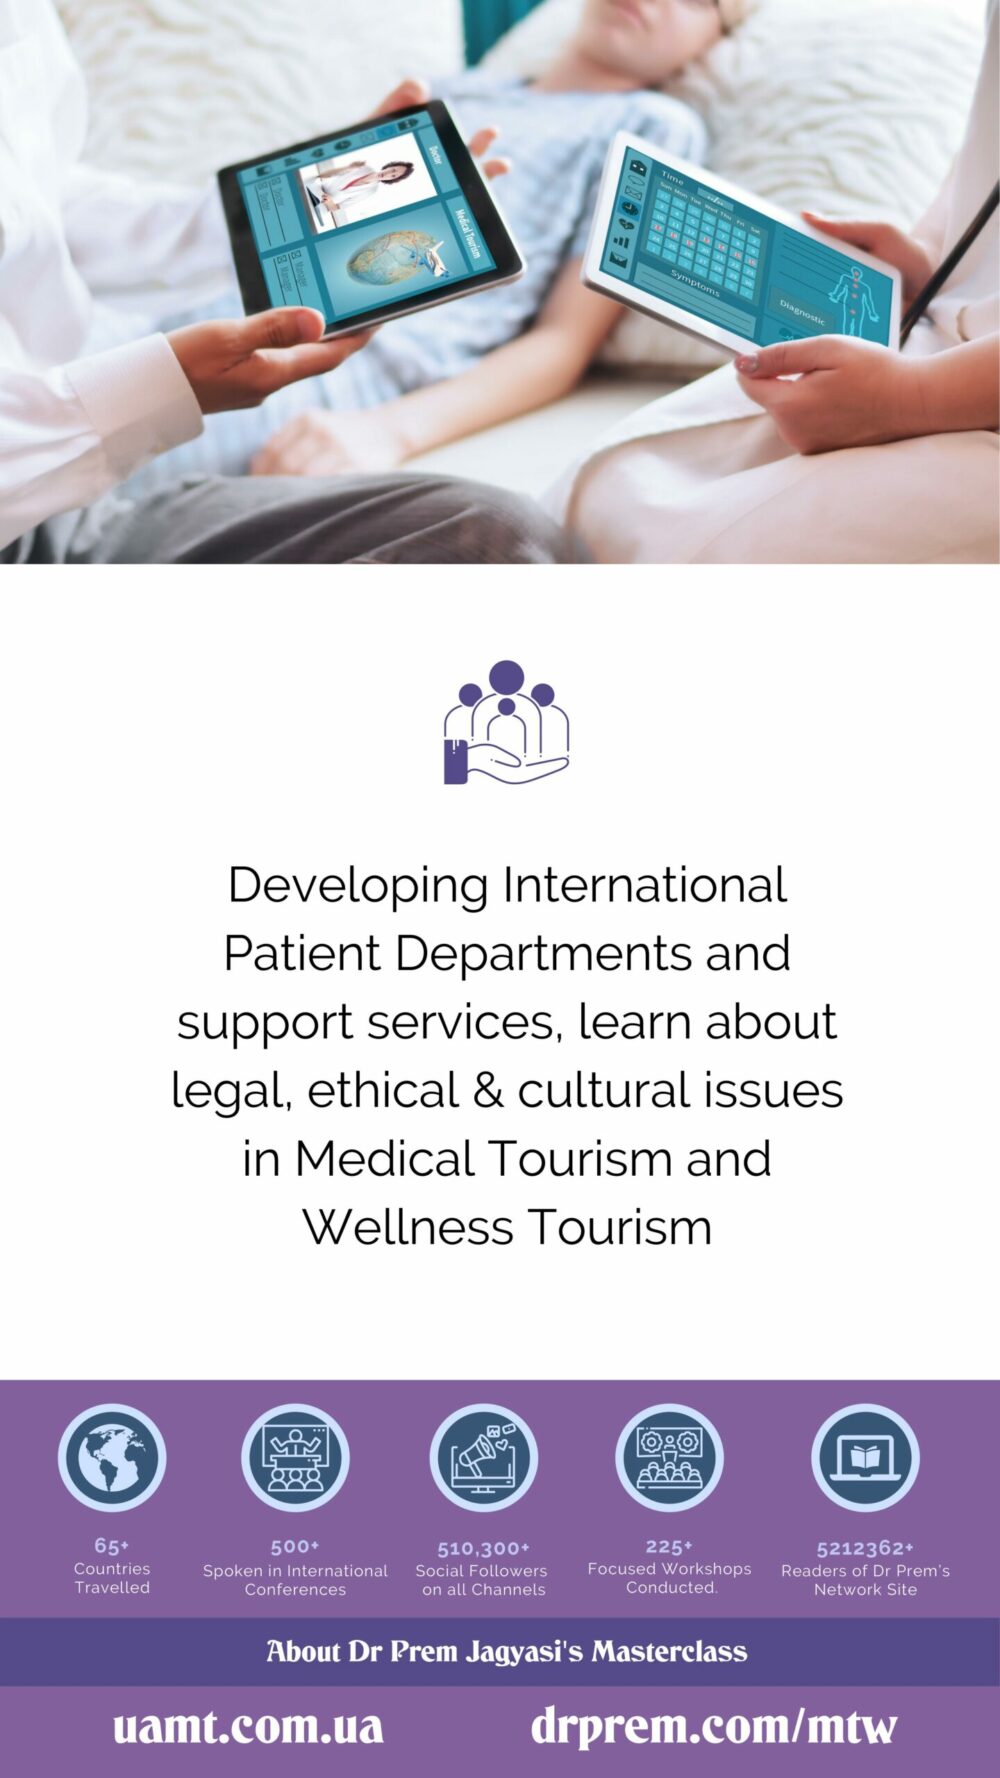 Upcoming International Masterclass Medical Tourism | Wellness Resort2